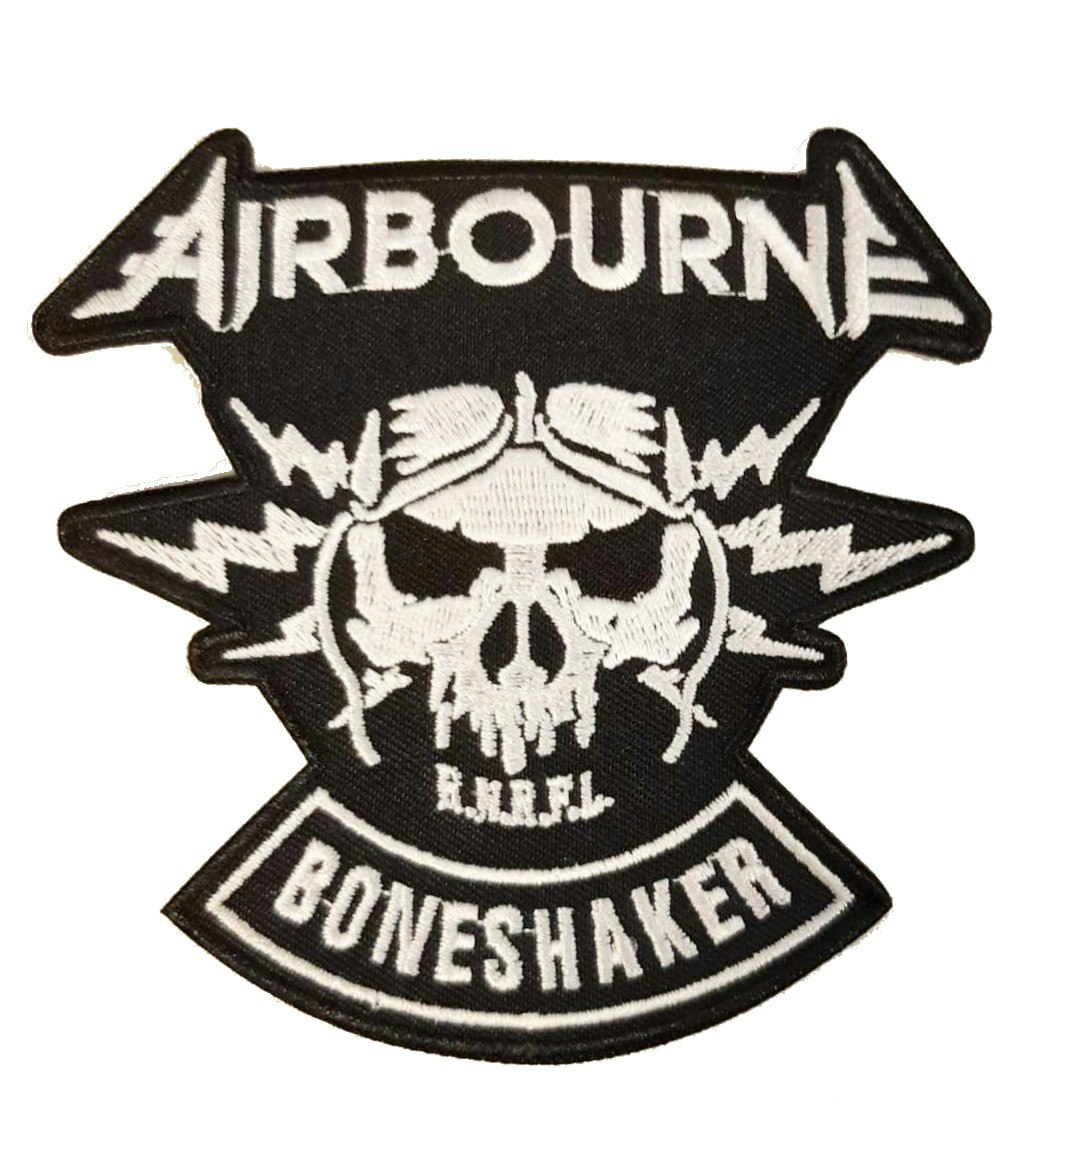 Airbourne boneshaker logo patch